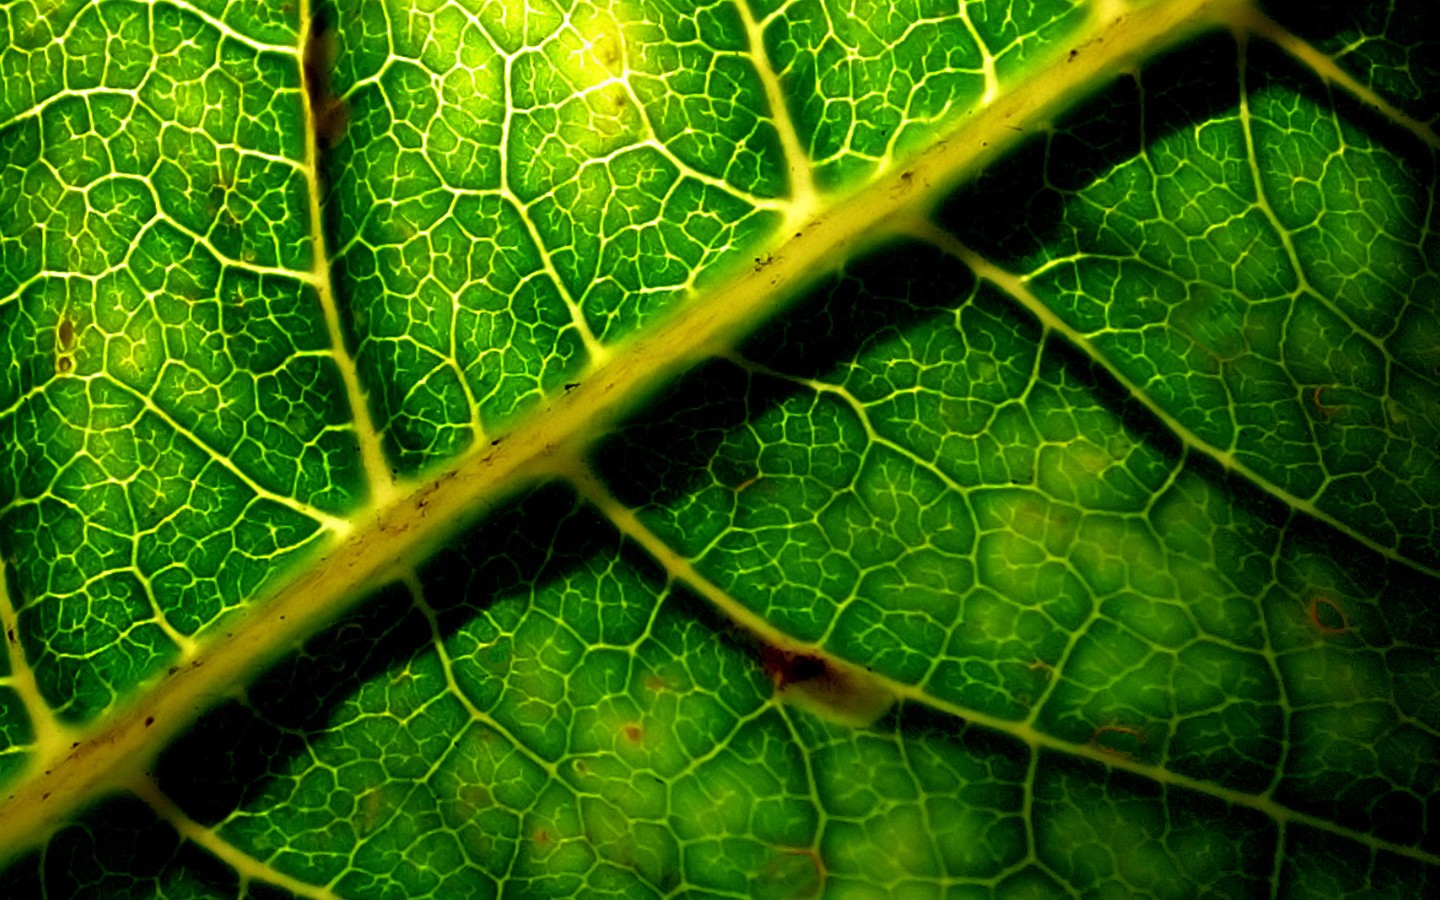  Vistaの植物の壁紙(6) #31 - 1440x900